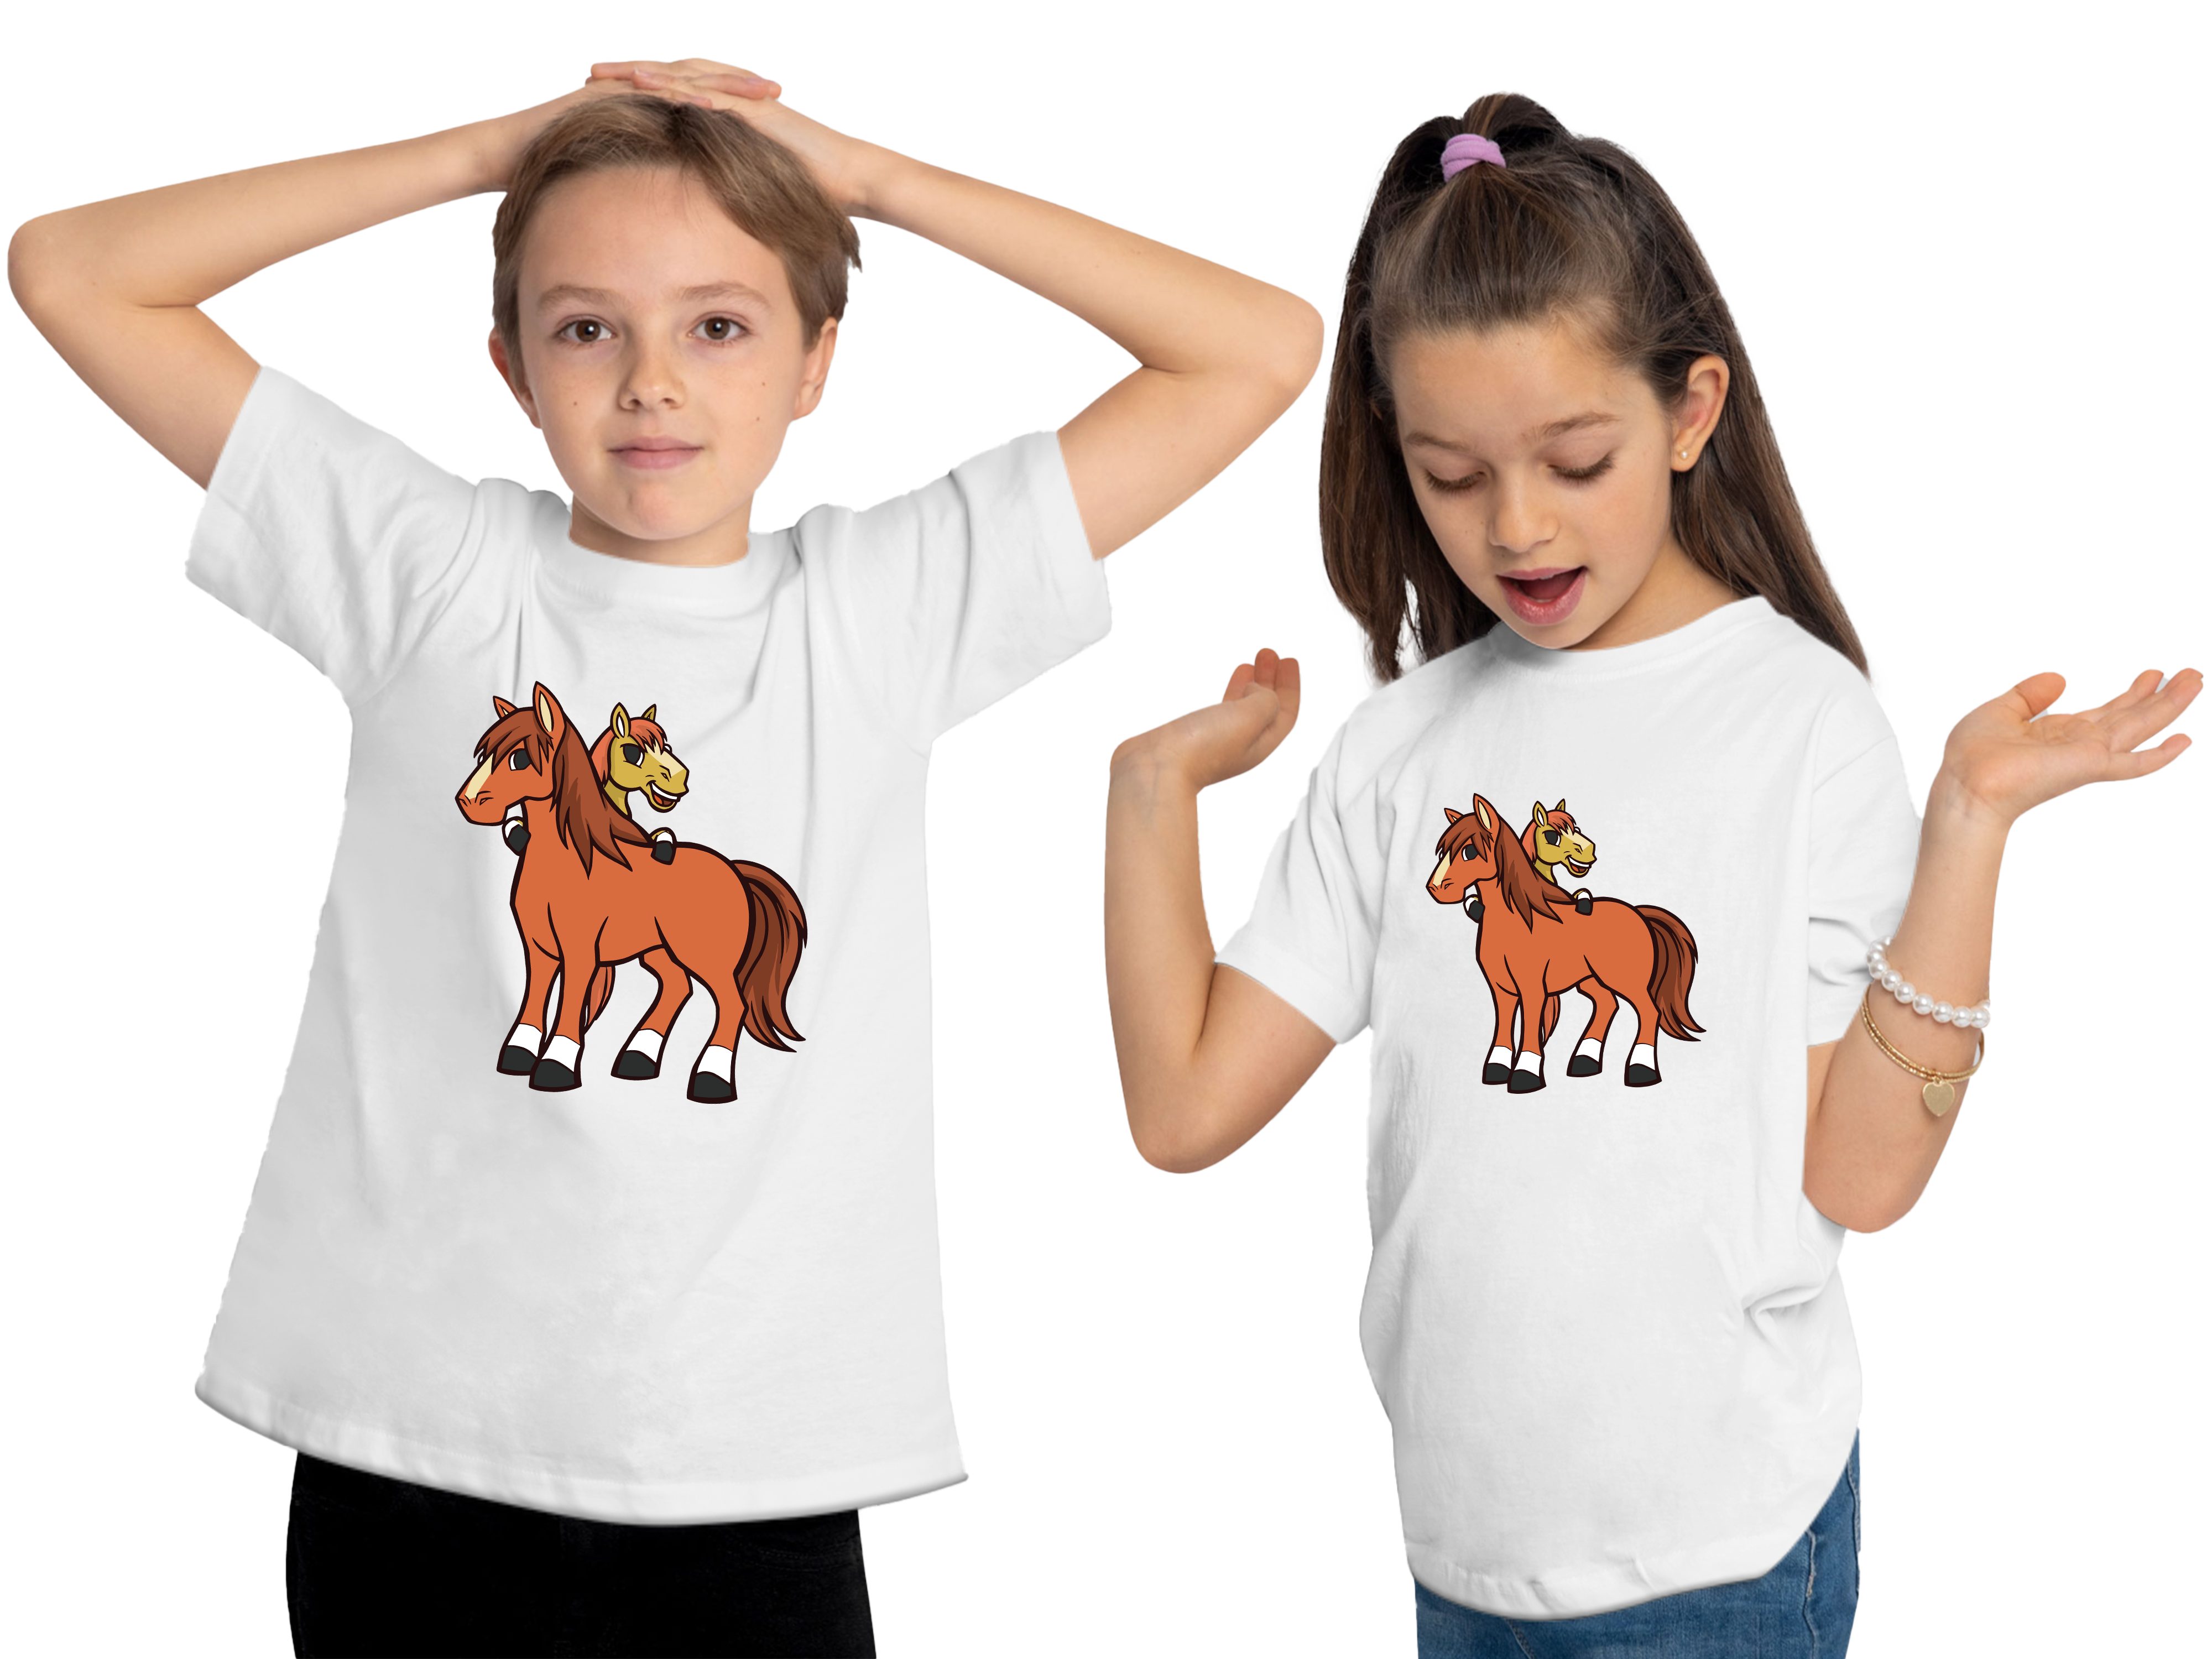 MyDesign24 T-Shirt Kinder Pferde mit cartoon Baumwollshirt bedruckt Pferde Shirt 2 Aufdruck, - weiss i251 Print